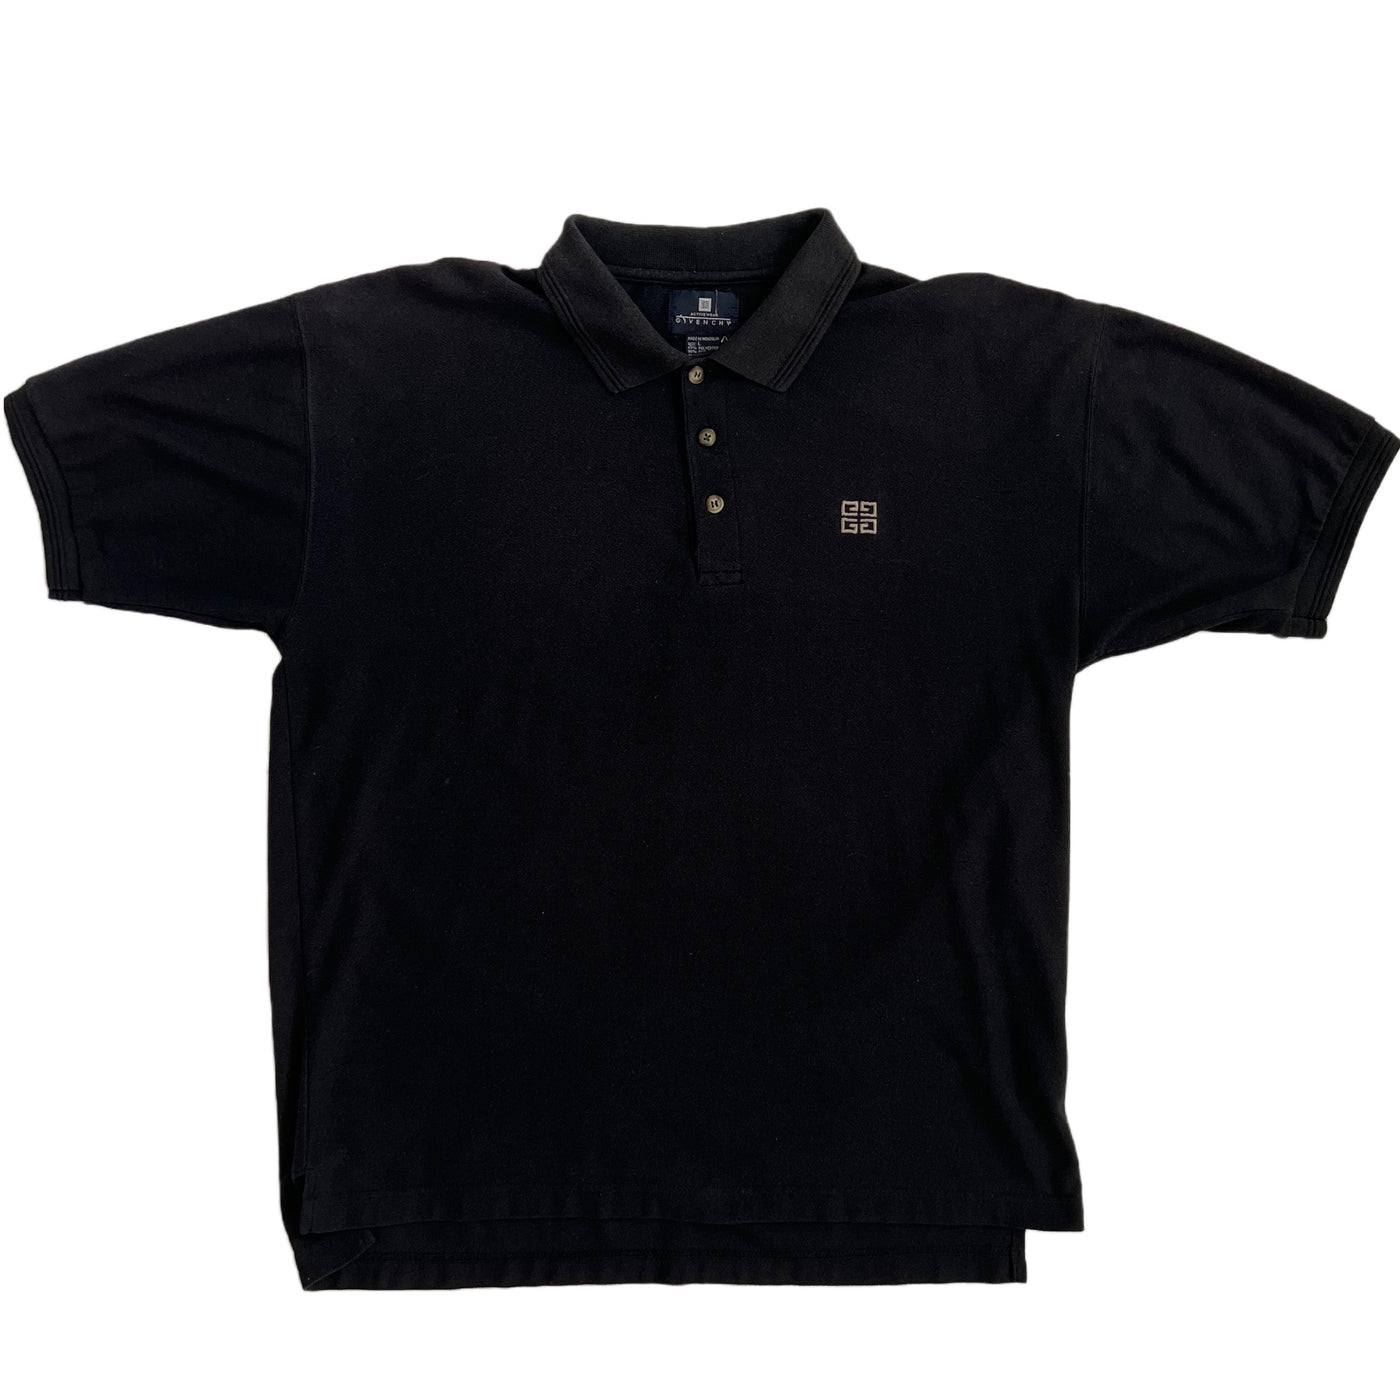 Vintage Givenchy Black Polo Shirt